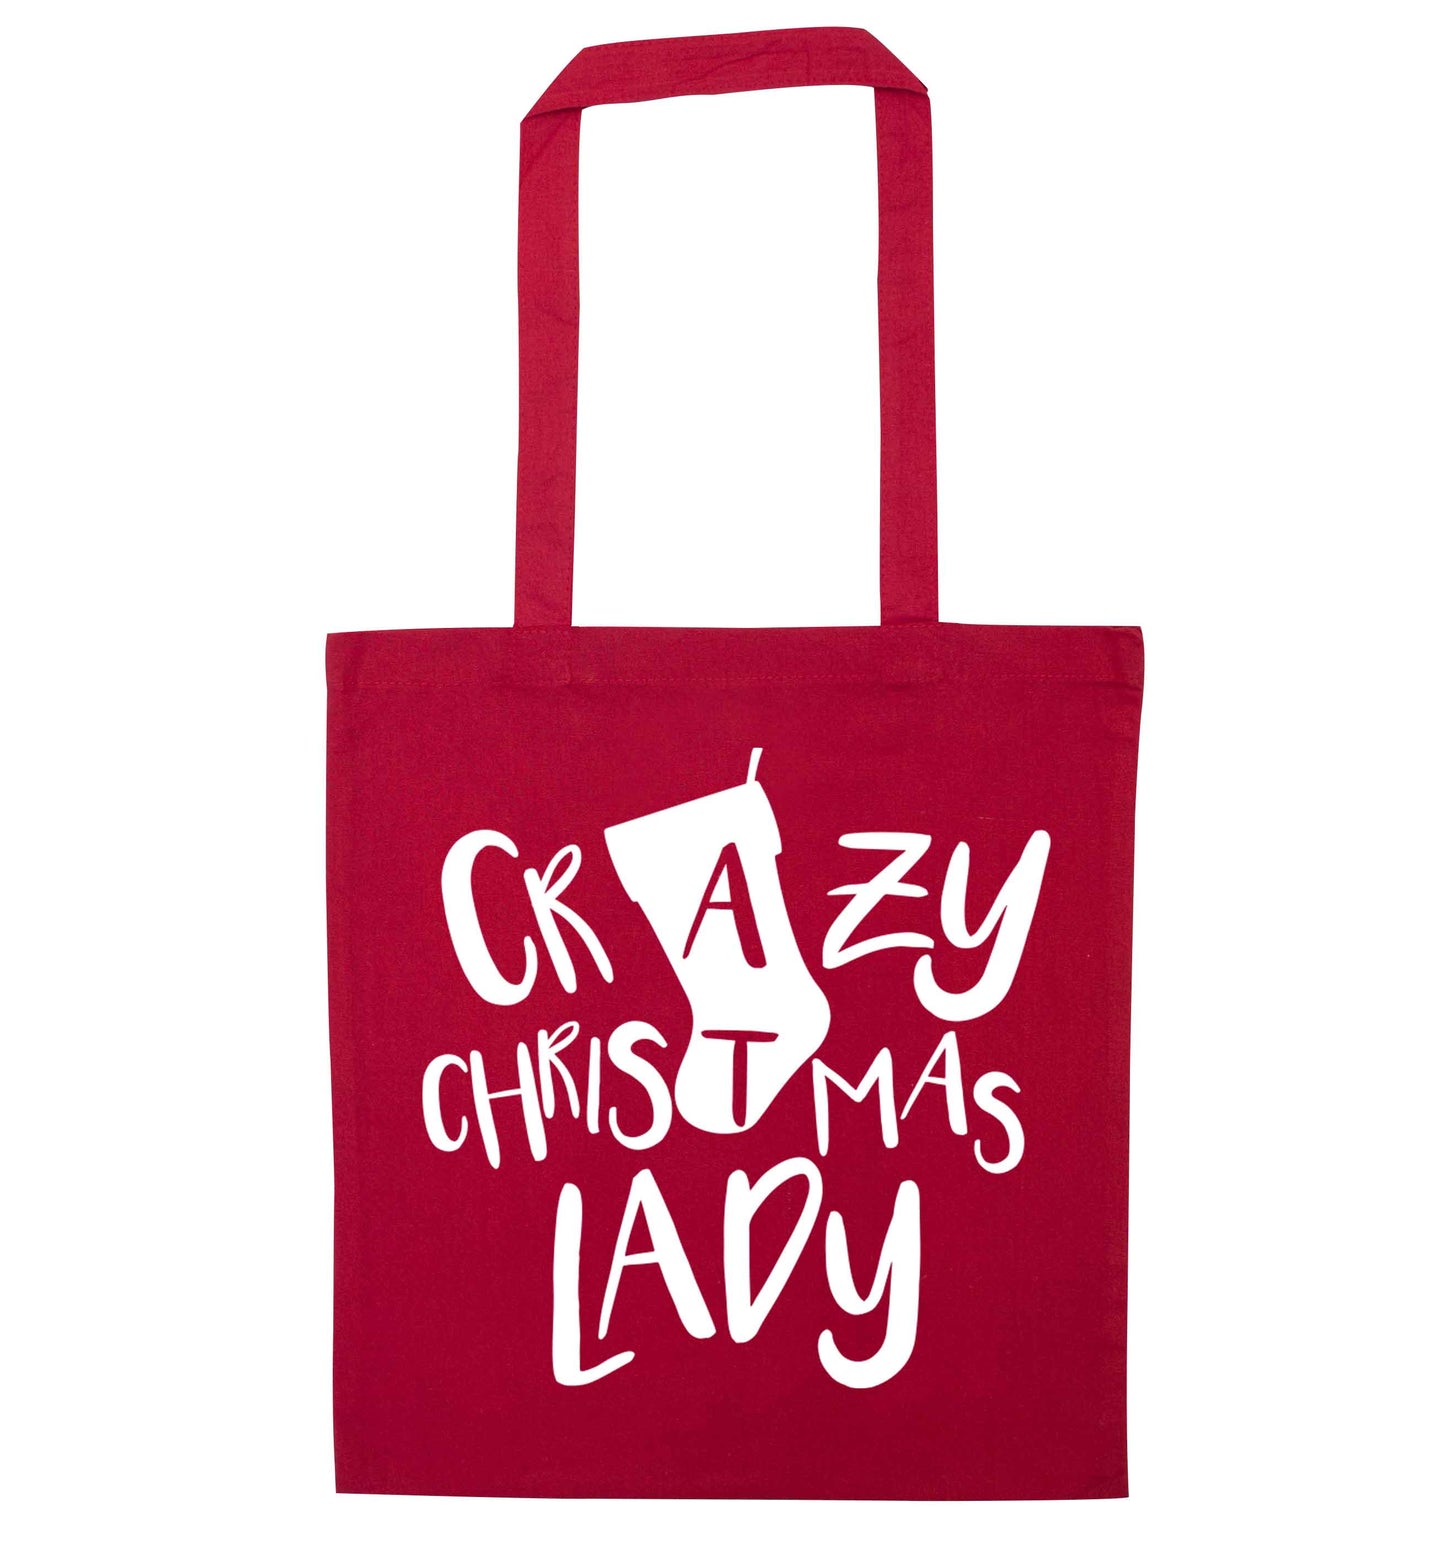 Crazy Christmas Dude red tote bag